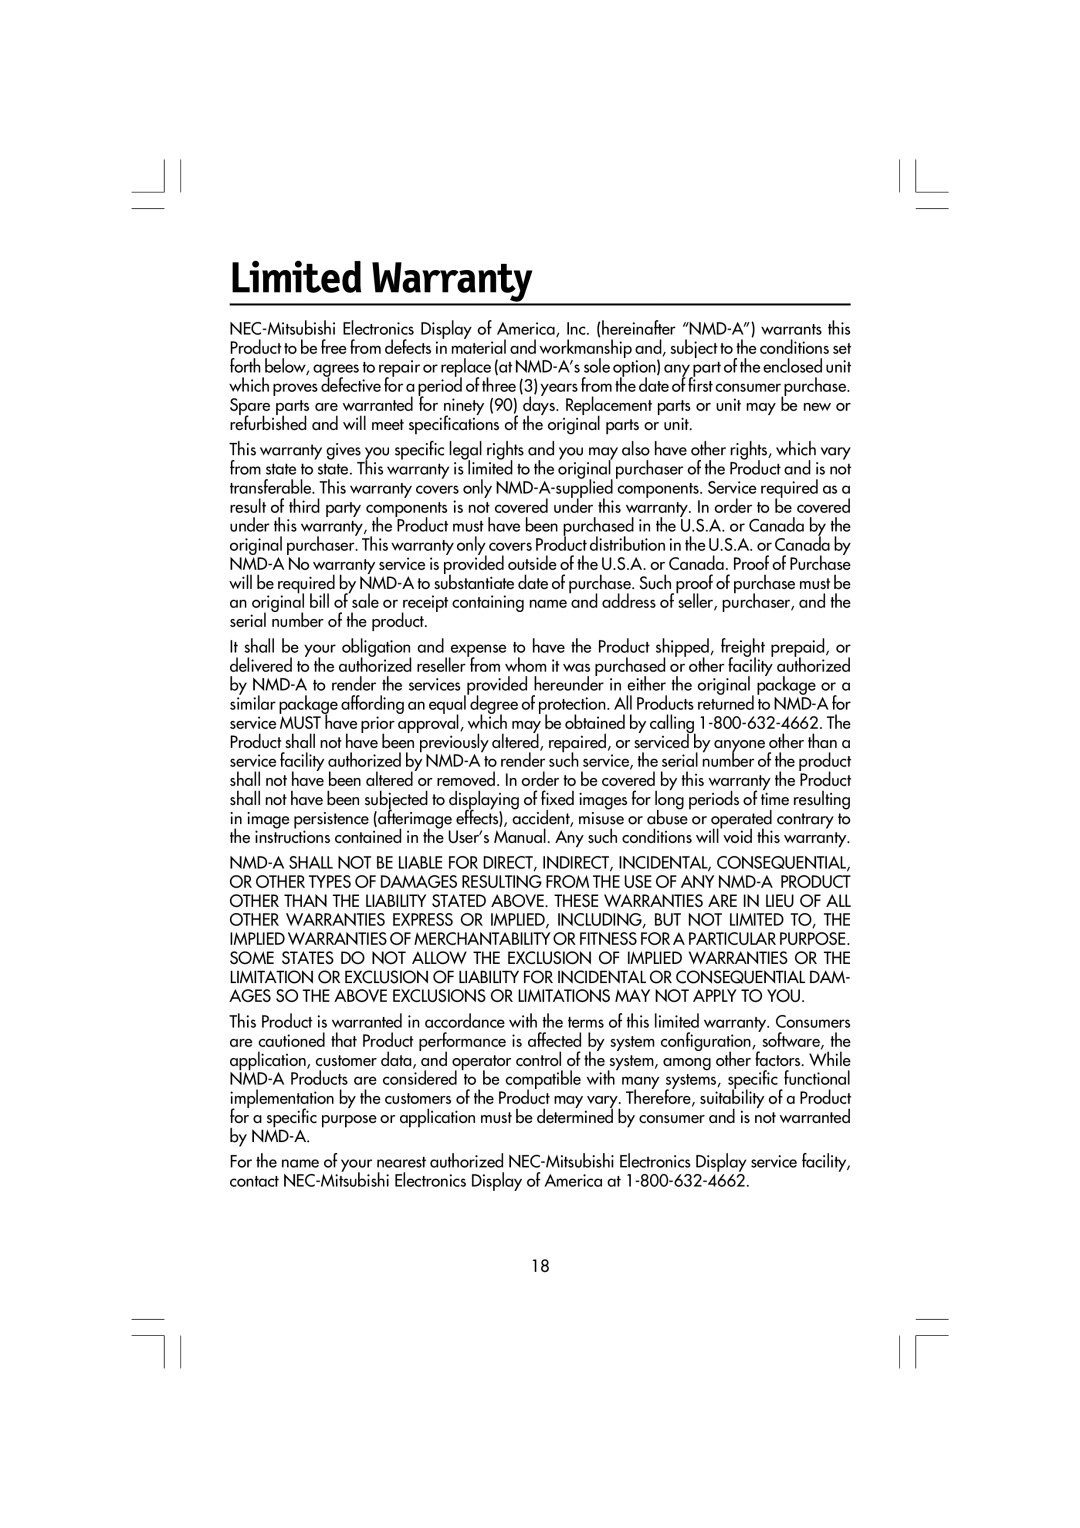 Mitsubishi Electronics LCD1720M manual Limited Warranty 